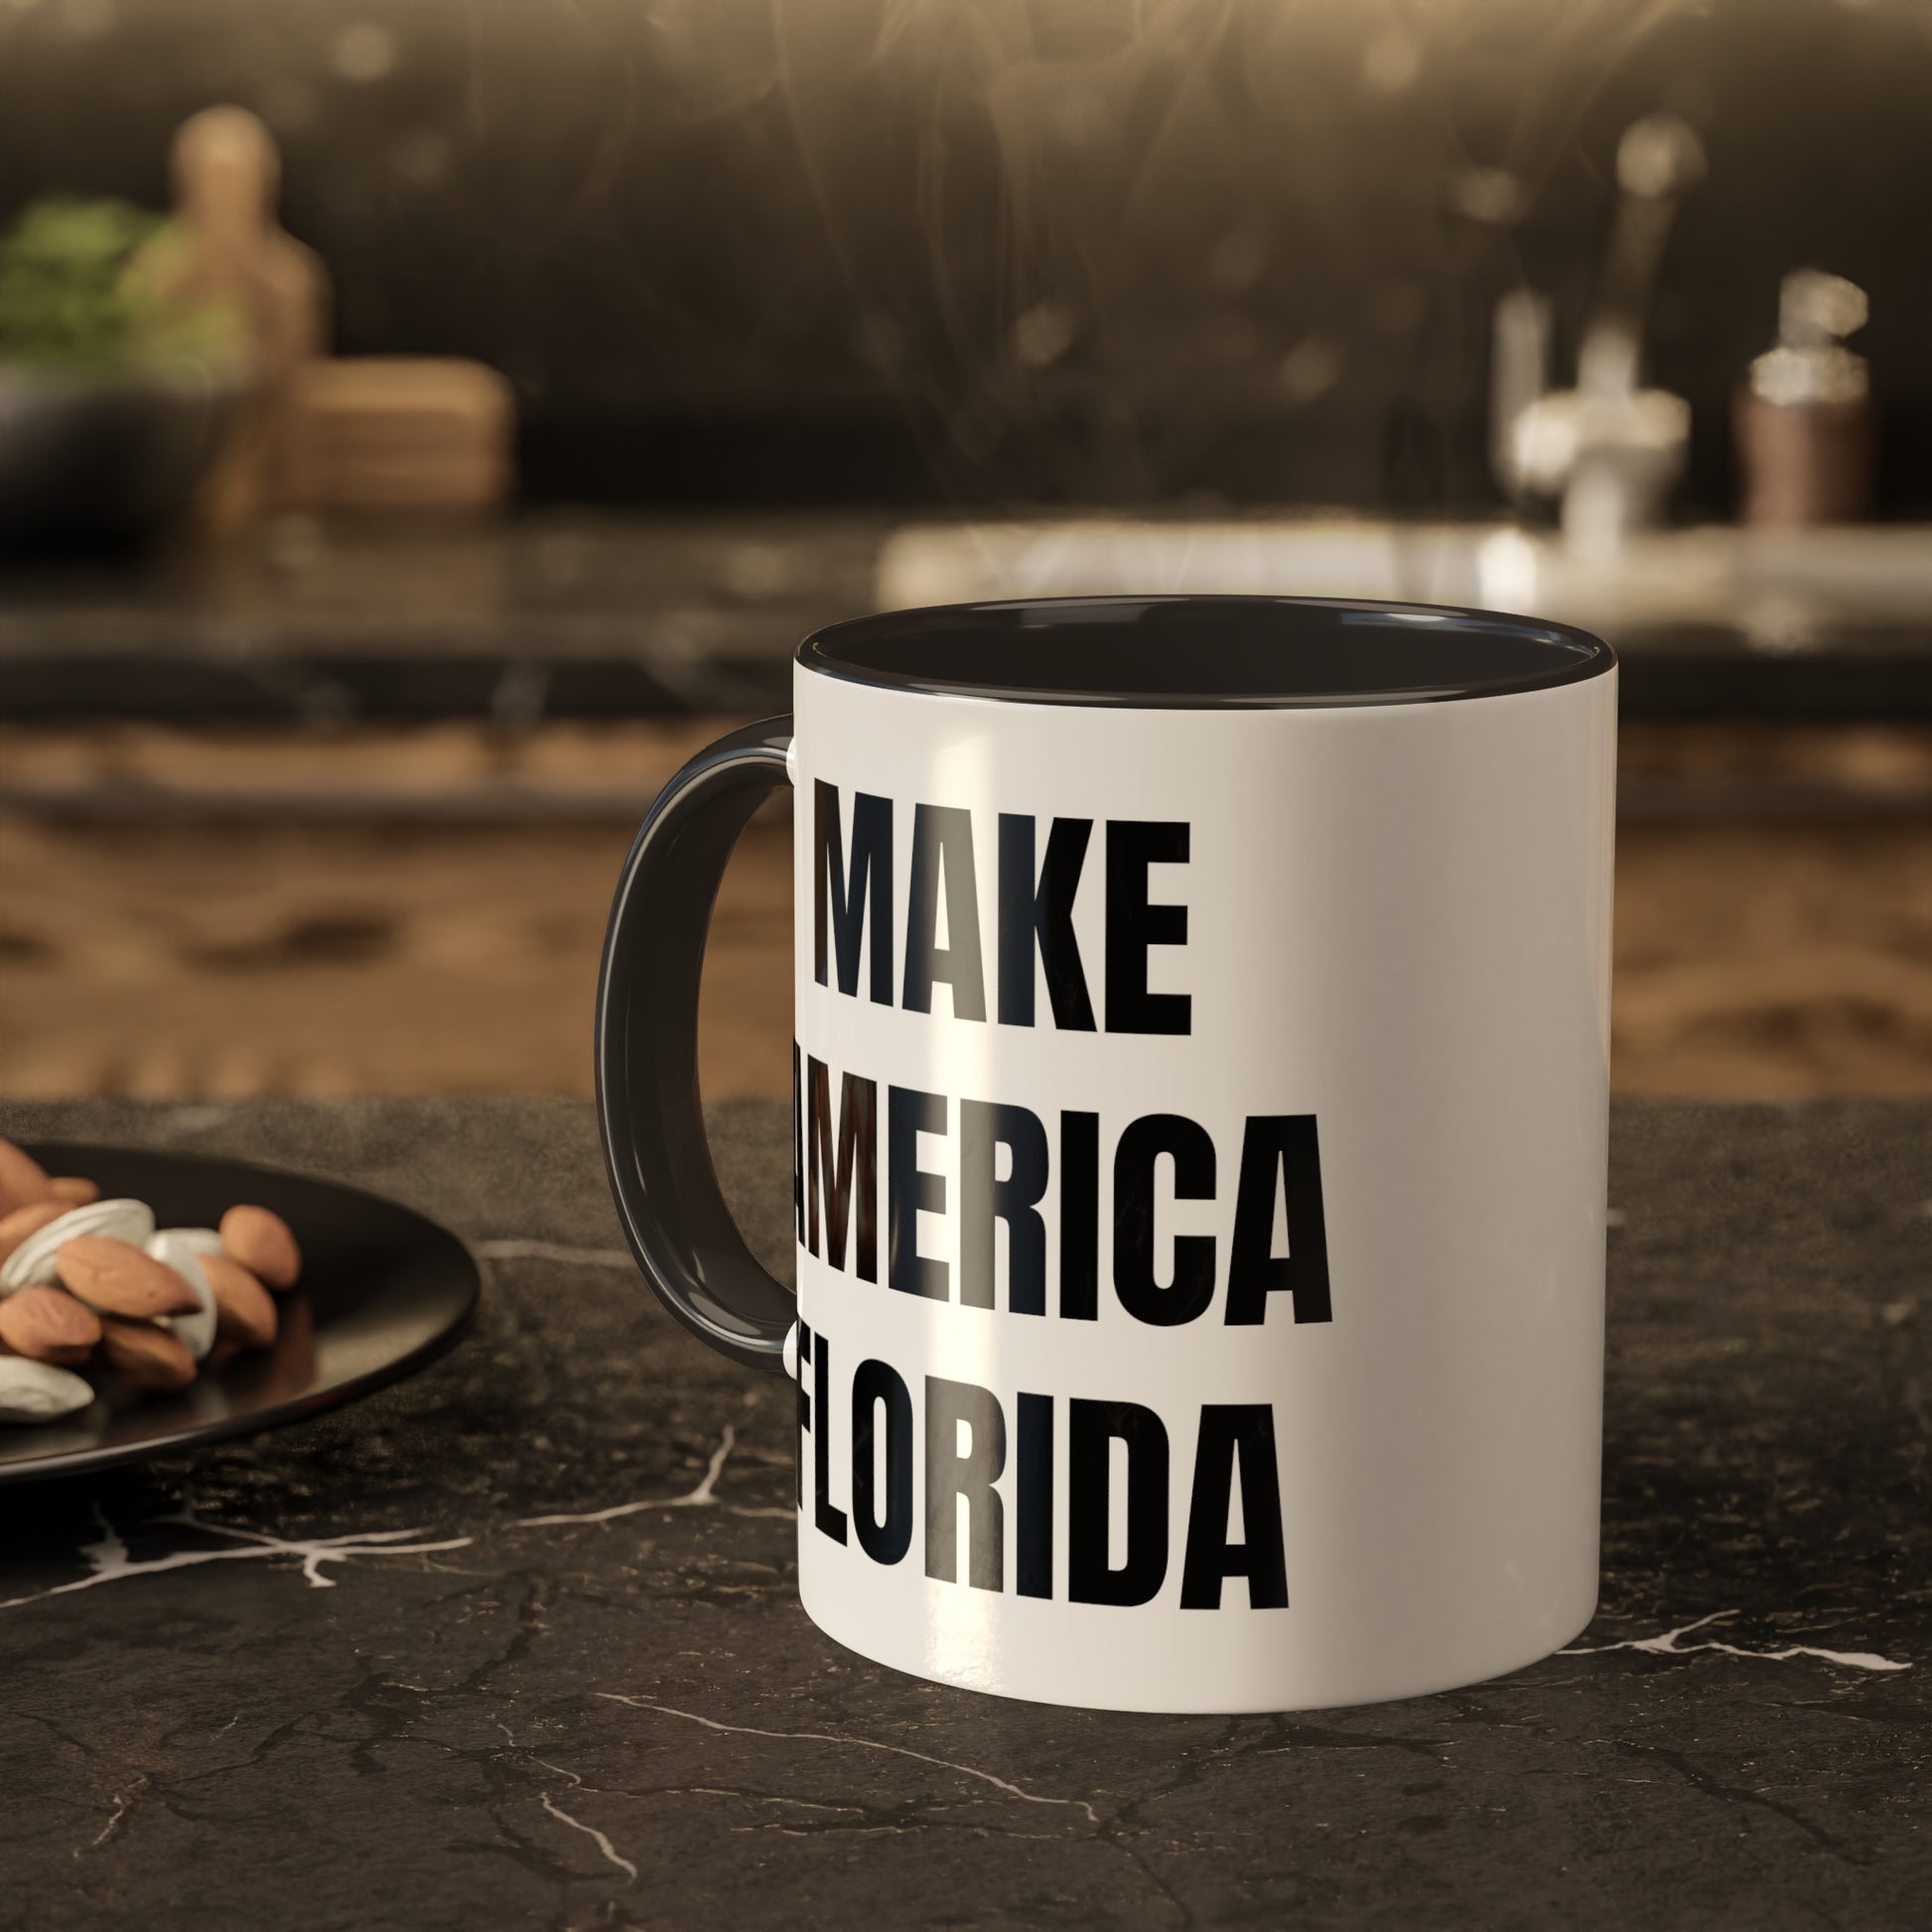 "Make America Florida" Funny Political Mug, Sarcastic Coffee Cup, Humorous Office Gift, Unique Statement Drinkware, USA Politics Humor - News For Reasonable People